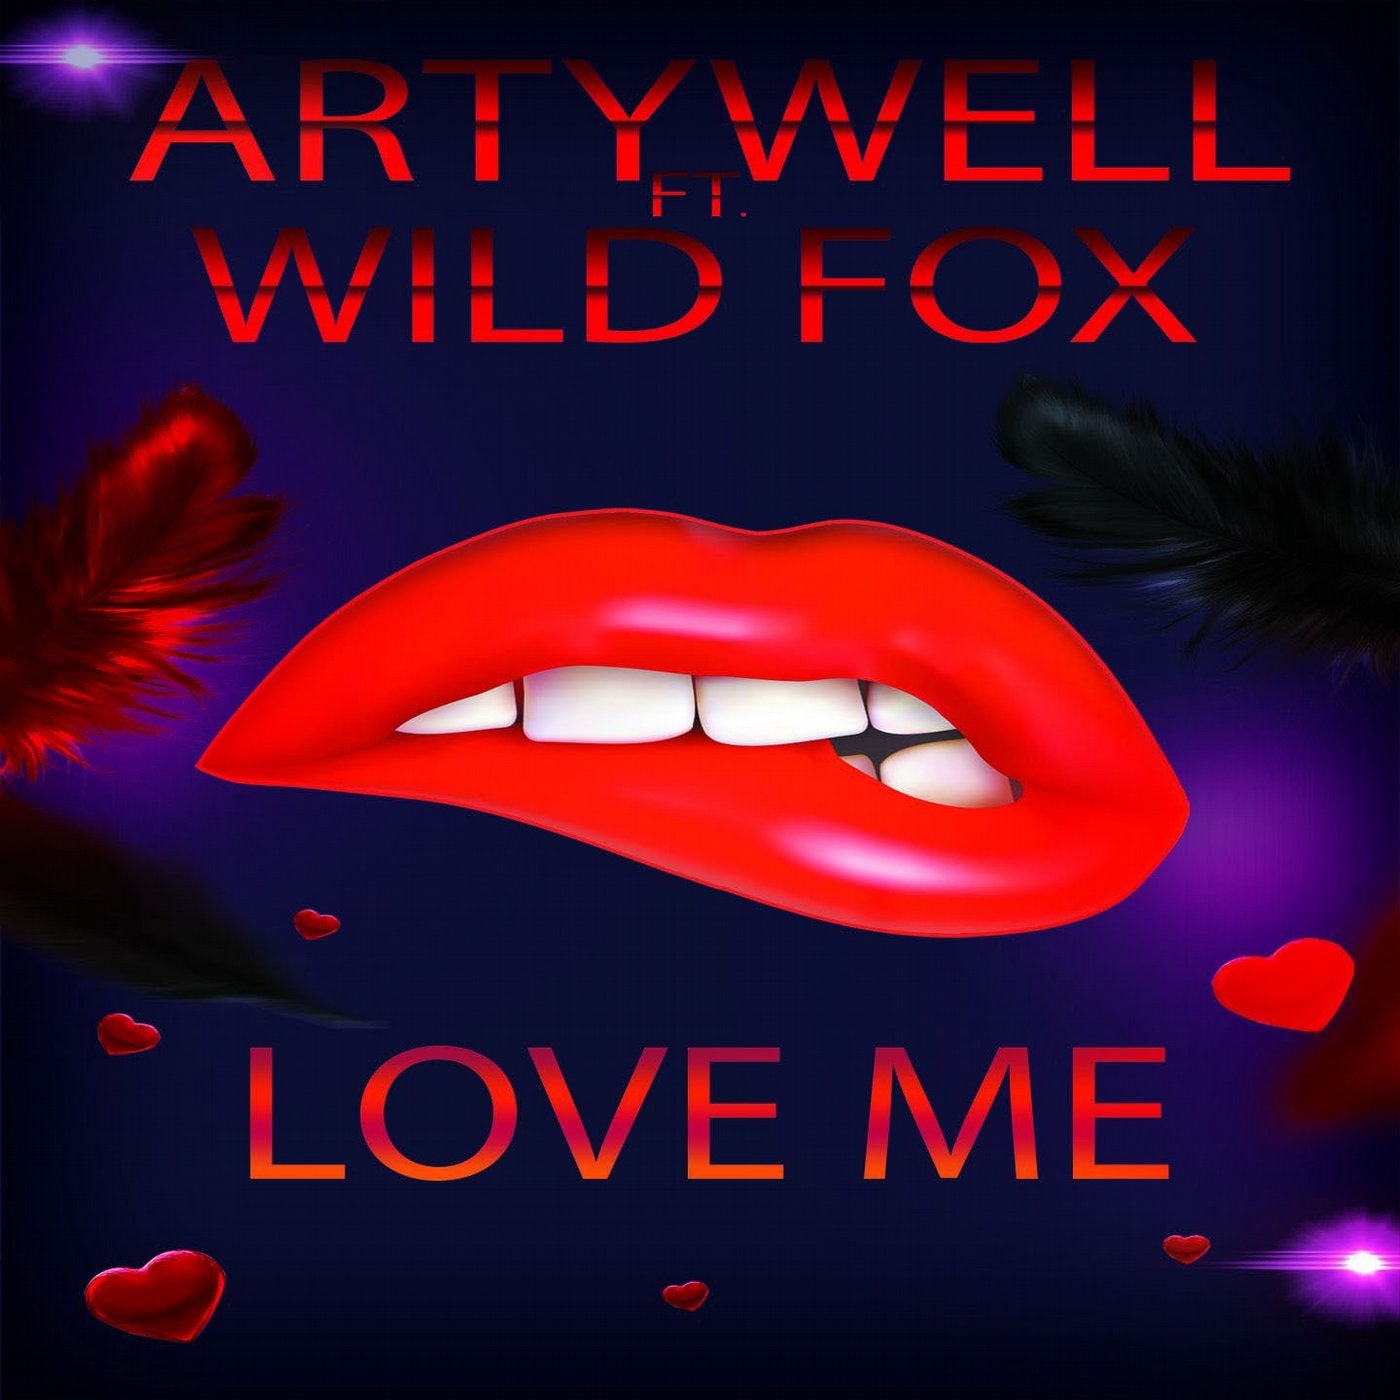 Love Me (feat. Wild Fox)